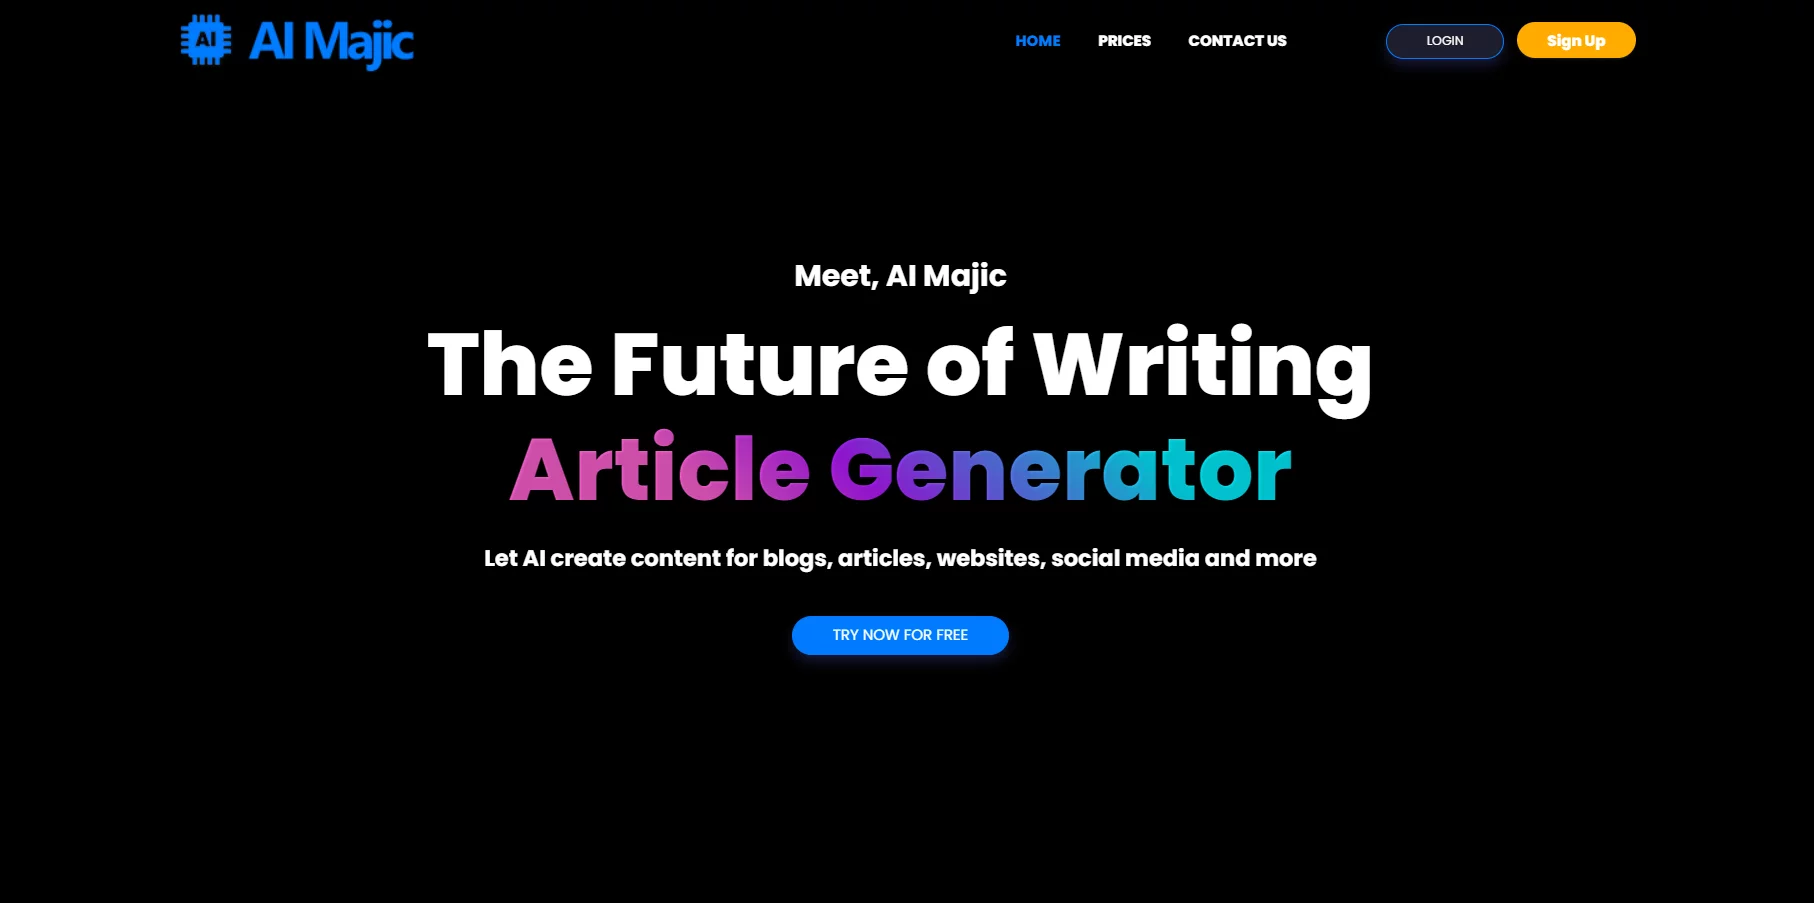  Let AI create content for blogs, articles,